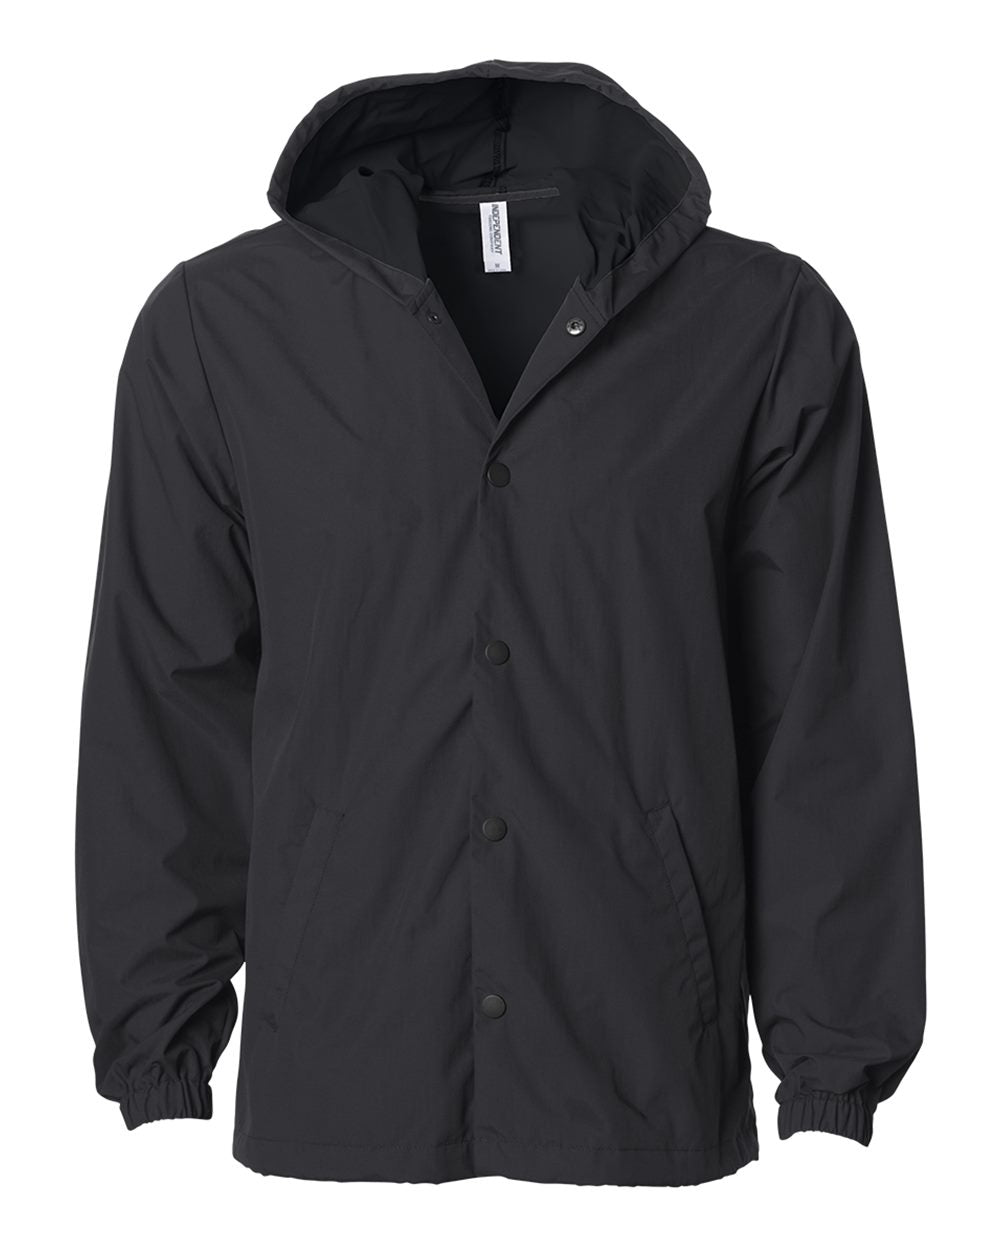 independent trading co hooded windbreaker coachs jacket black black